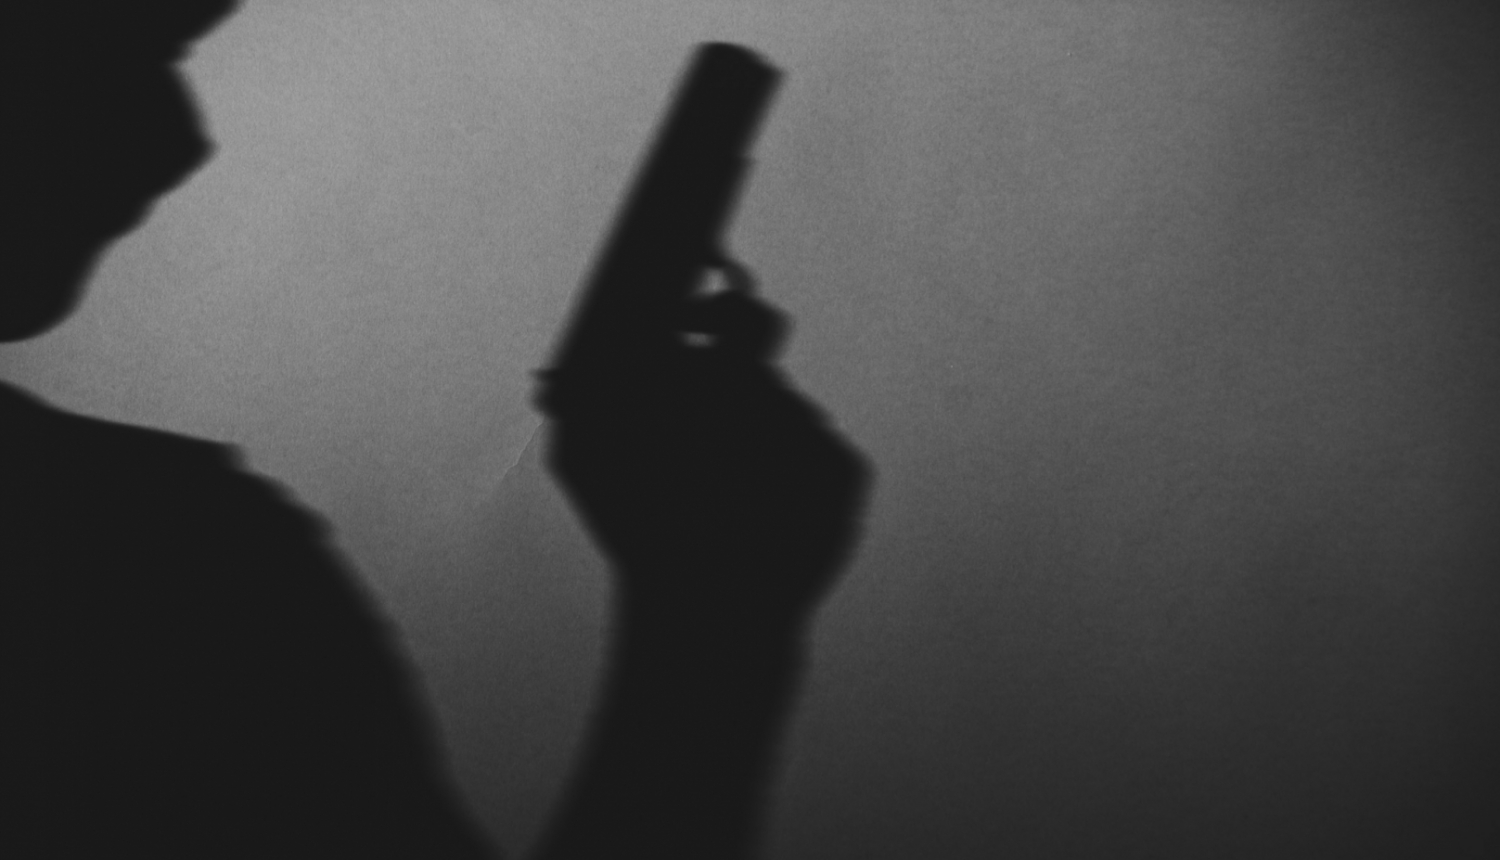 Cilvēka siluets ar ieroci rokā